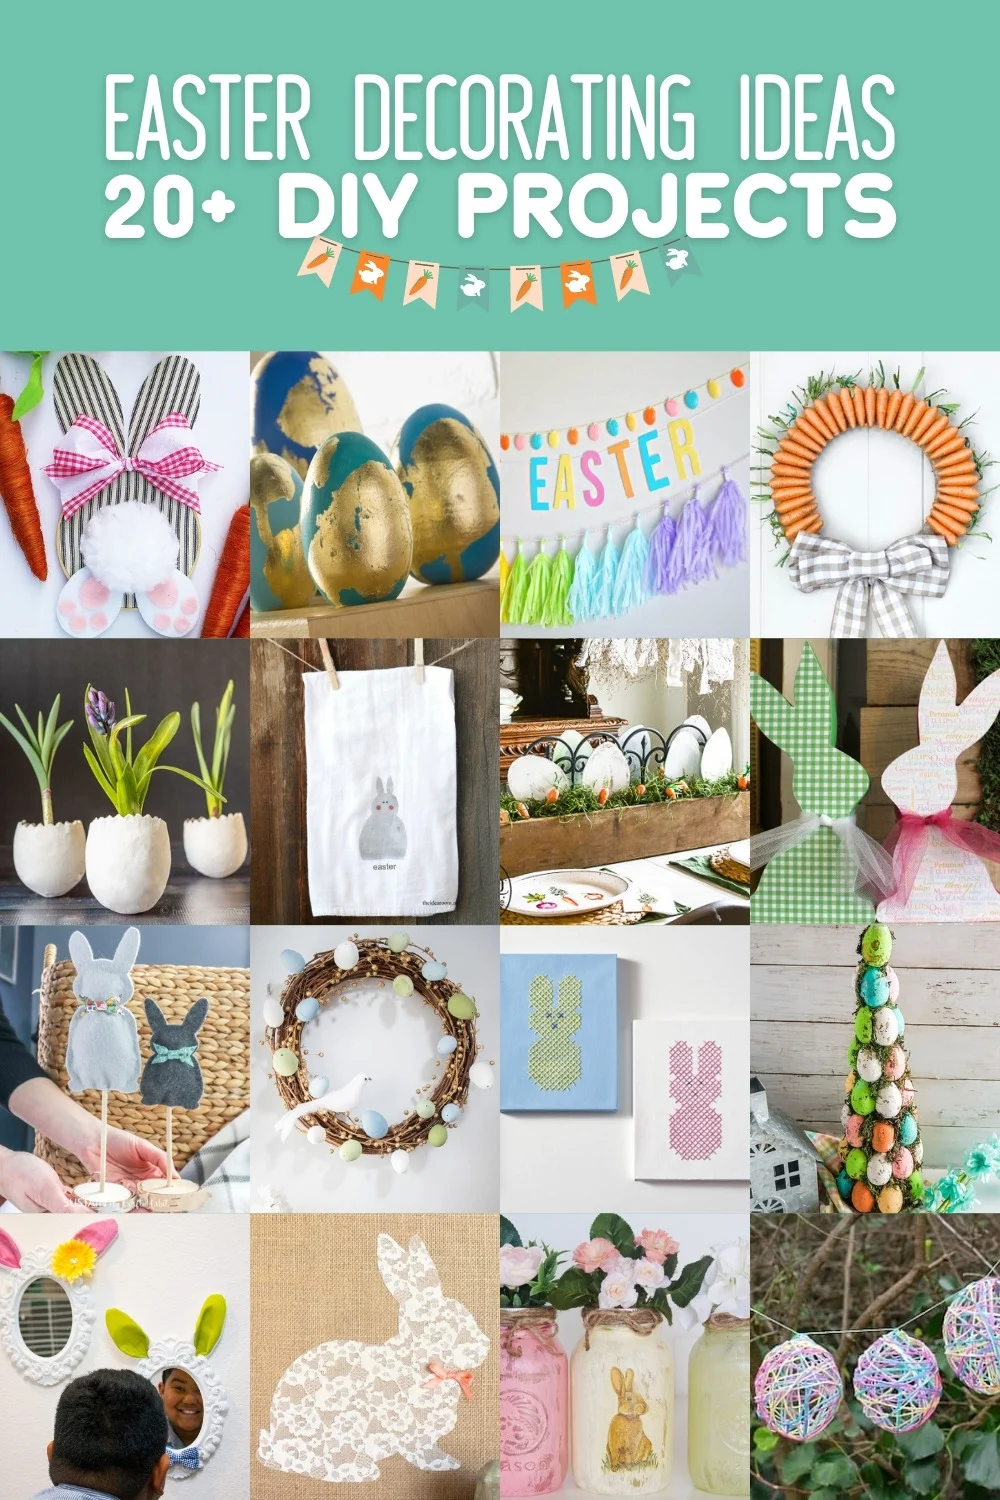 DIY Modern Farmhouse Easter Décor with FREE Printables - Party Ideas